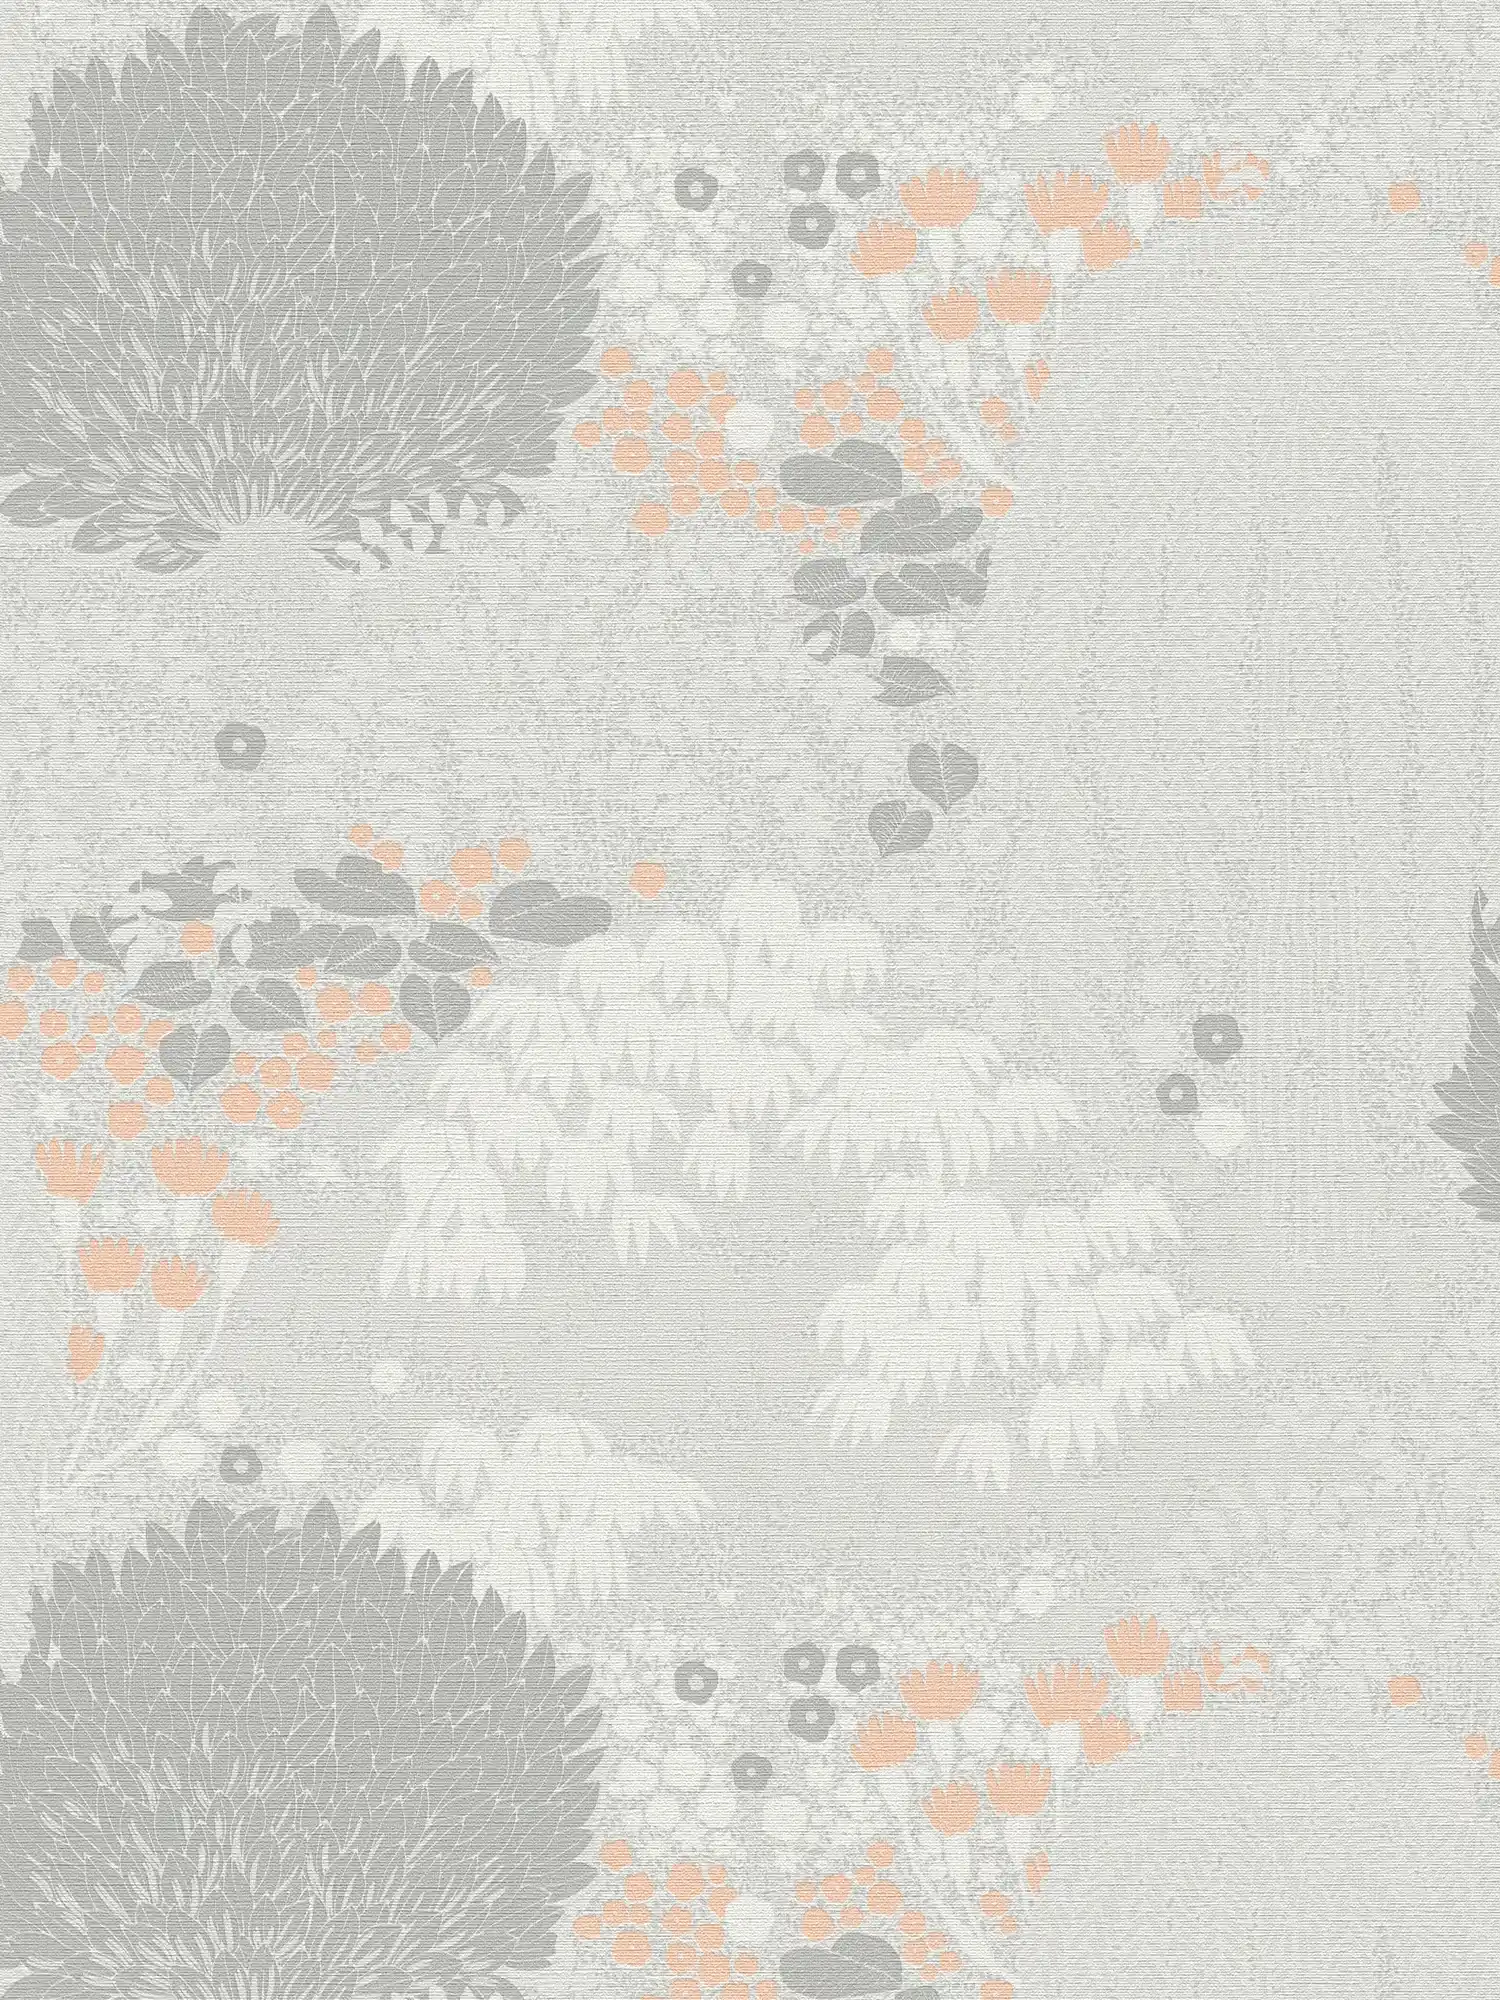         Papel pintado tejido-no tejido floral con hojas textura ligera, mate - gris claro, blanco, rosa
    